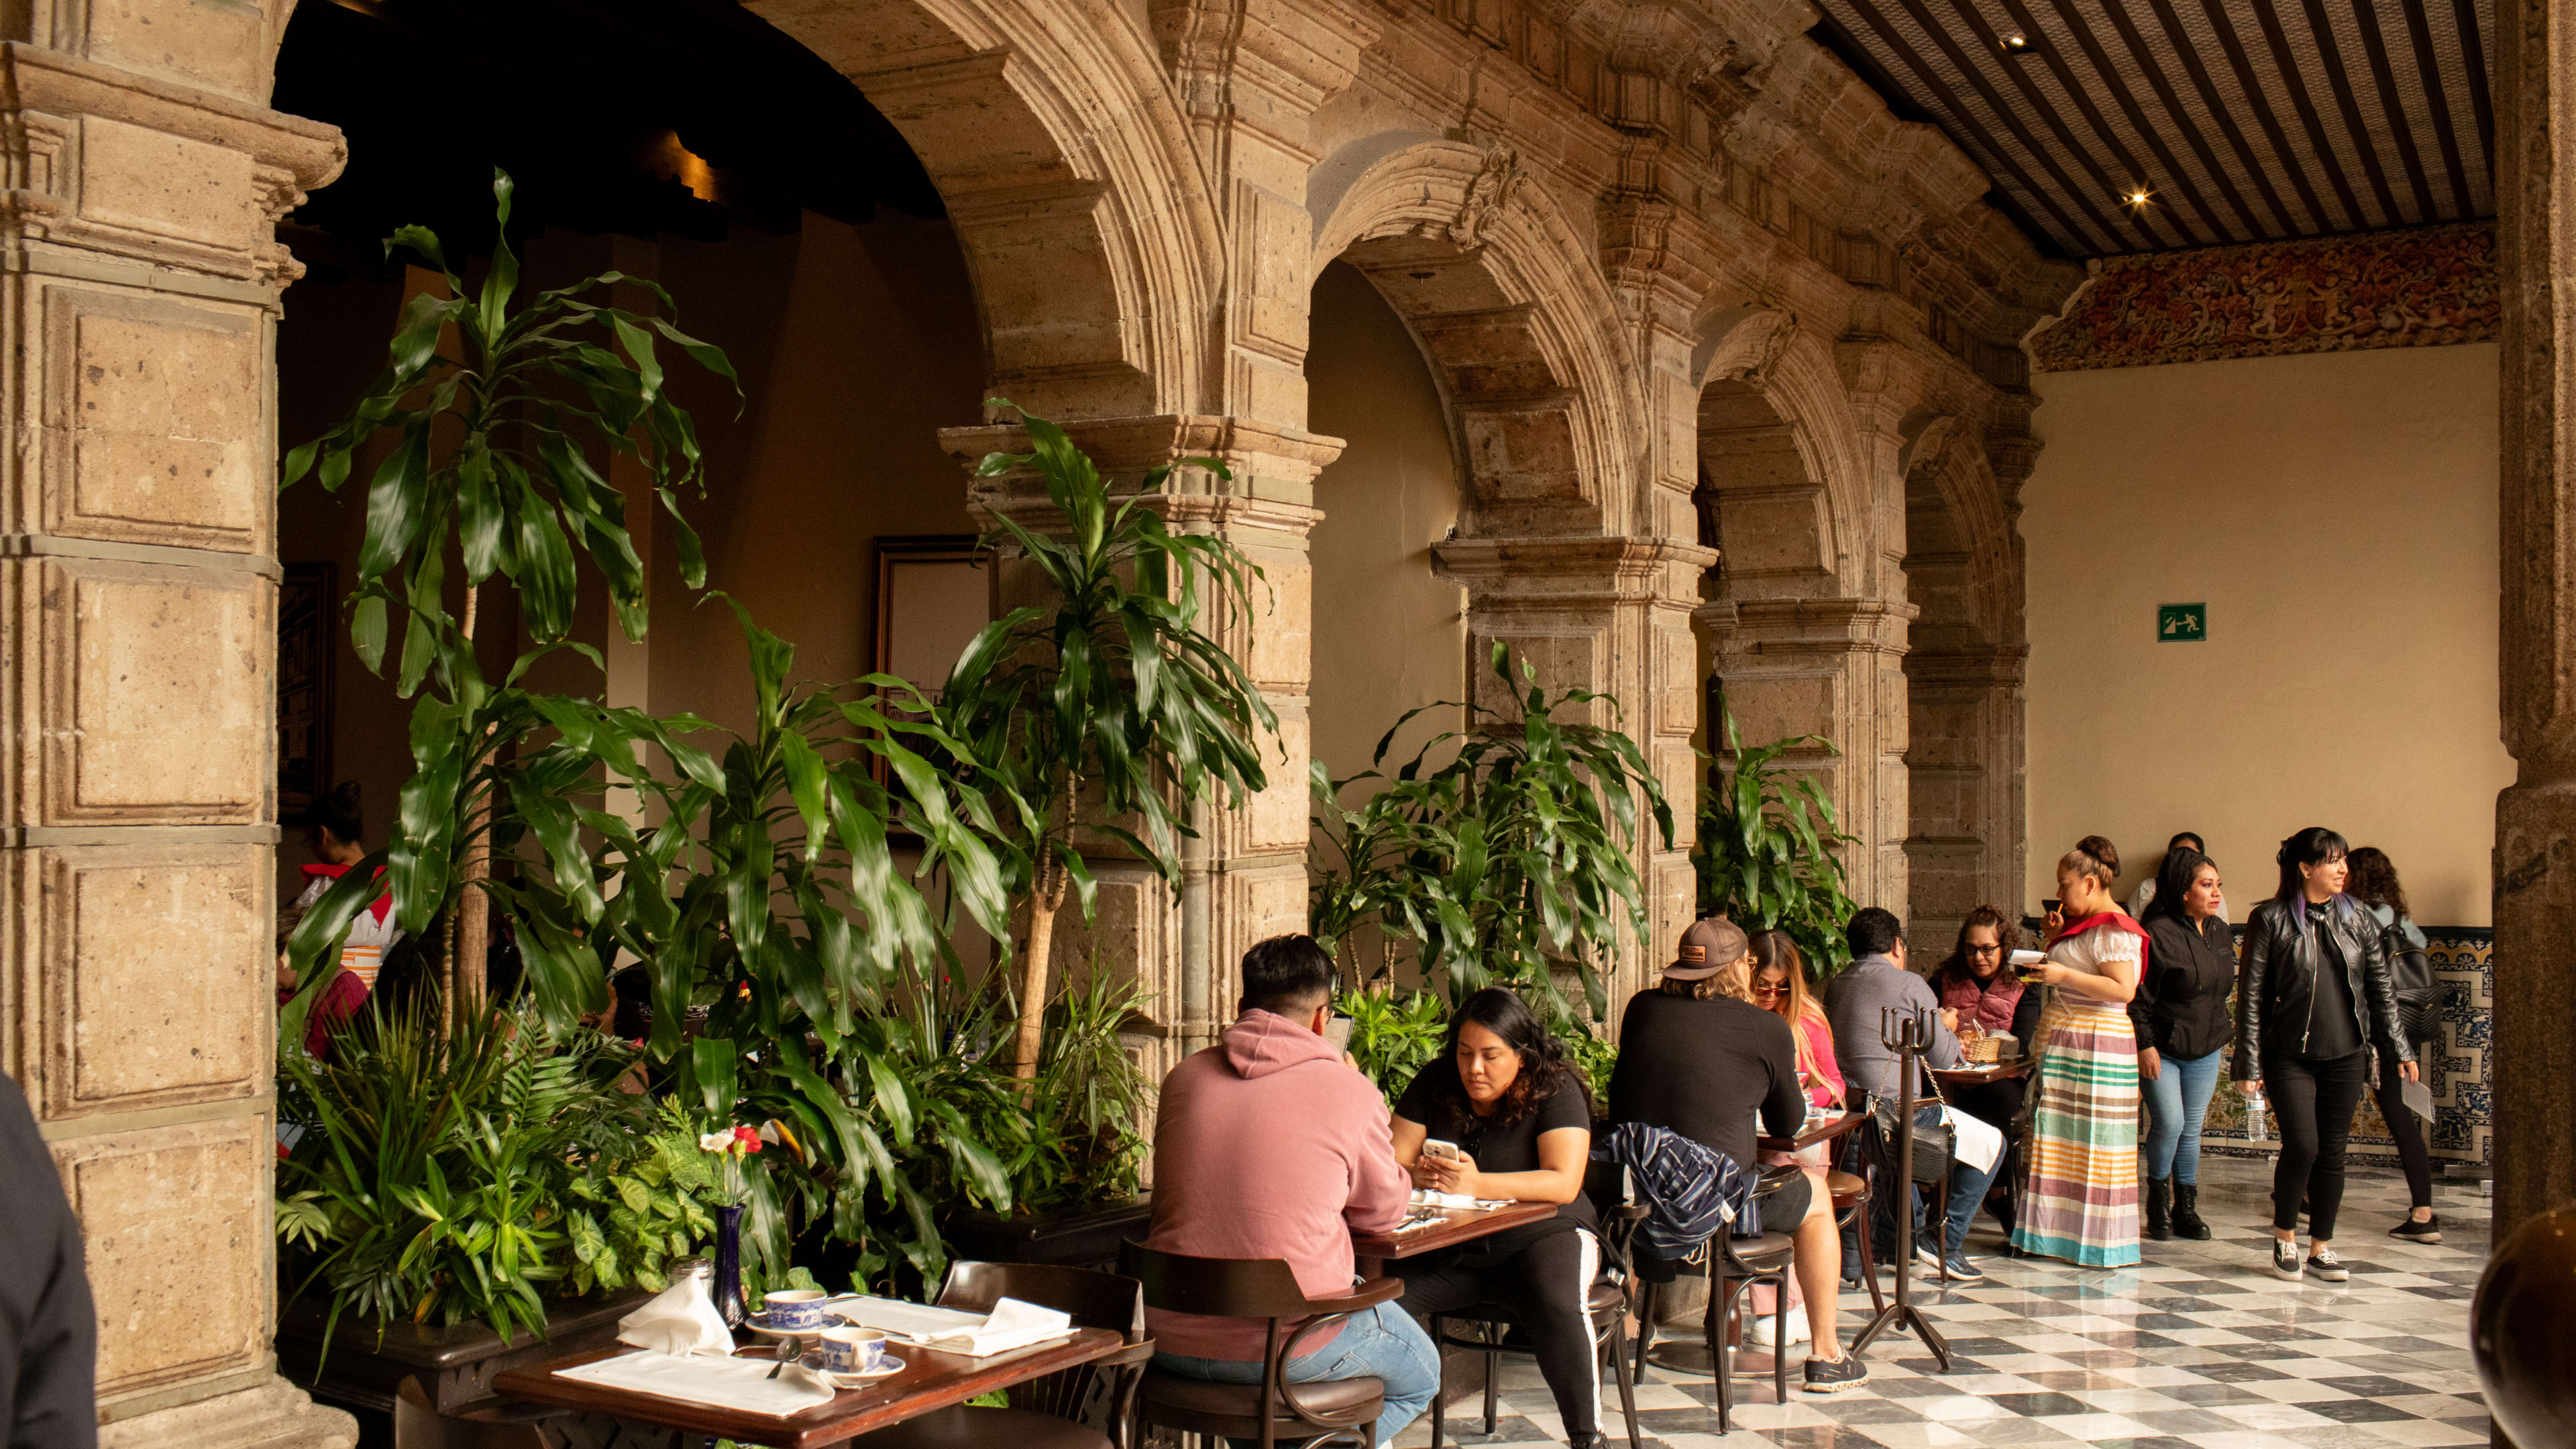 The interior courtyard of the restaurant inside Sanborns de los Azulejos